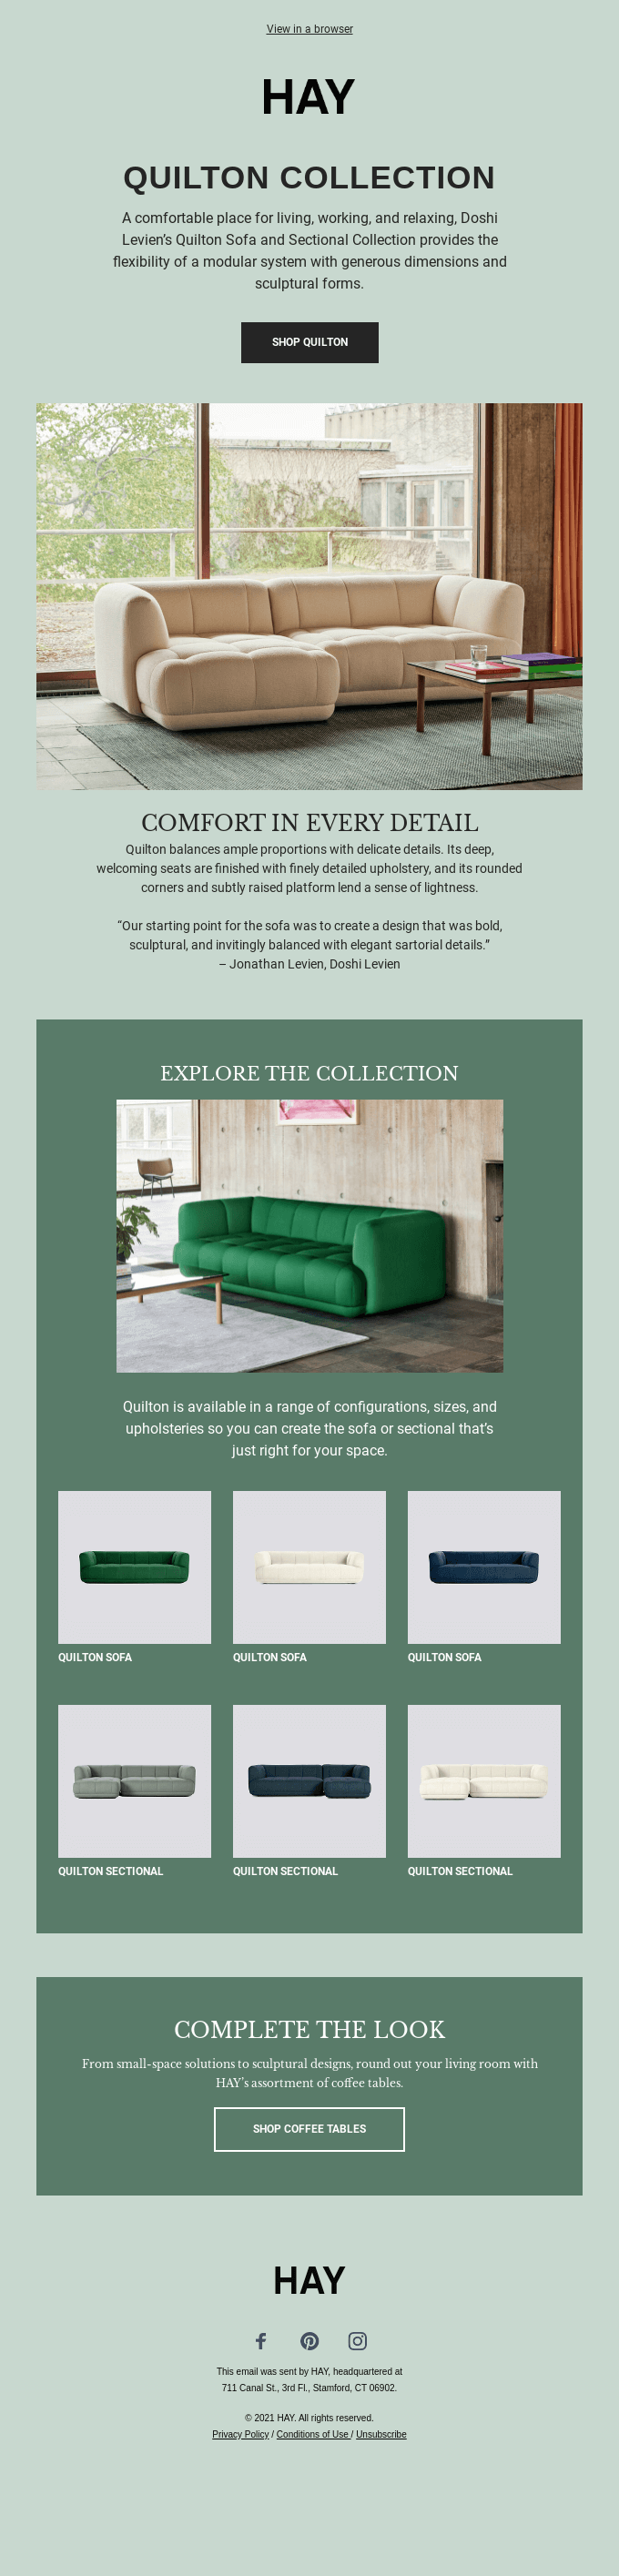 Modular comfort: Shop the Quilton Sofa and Sectional